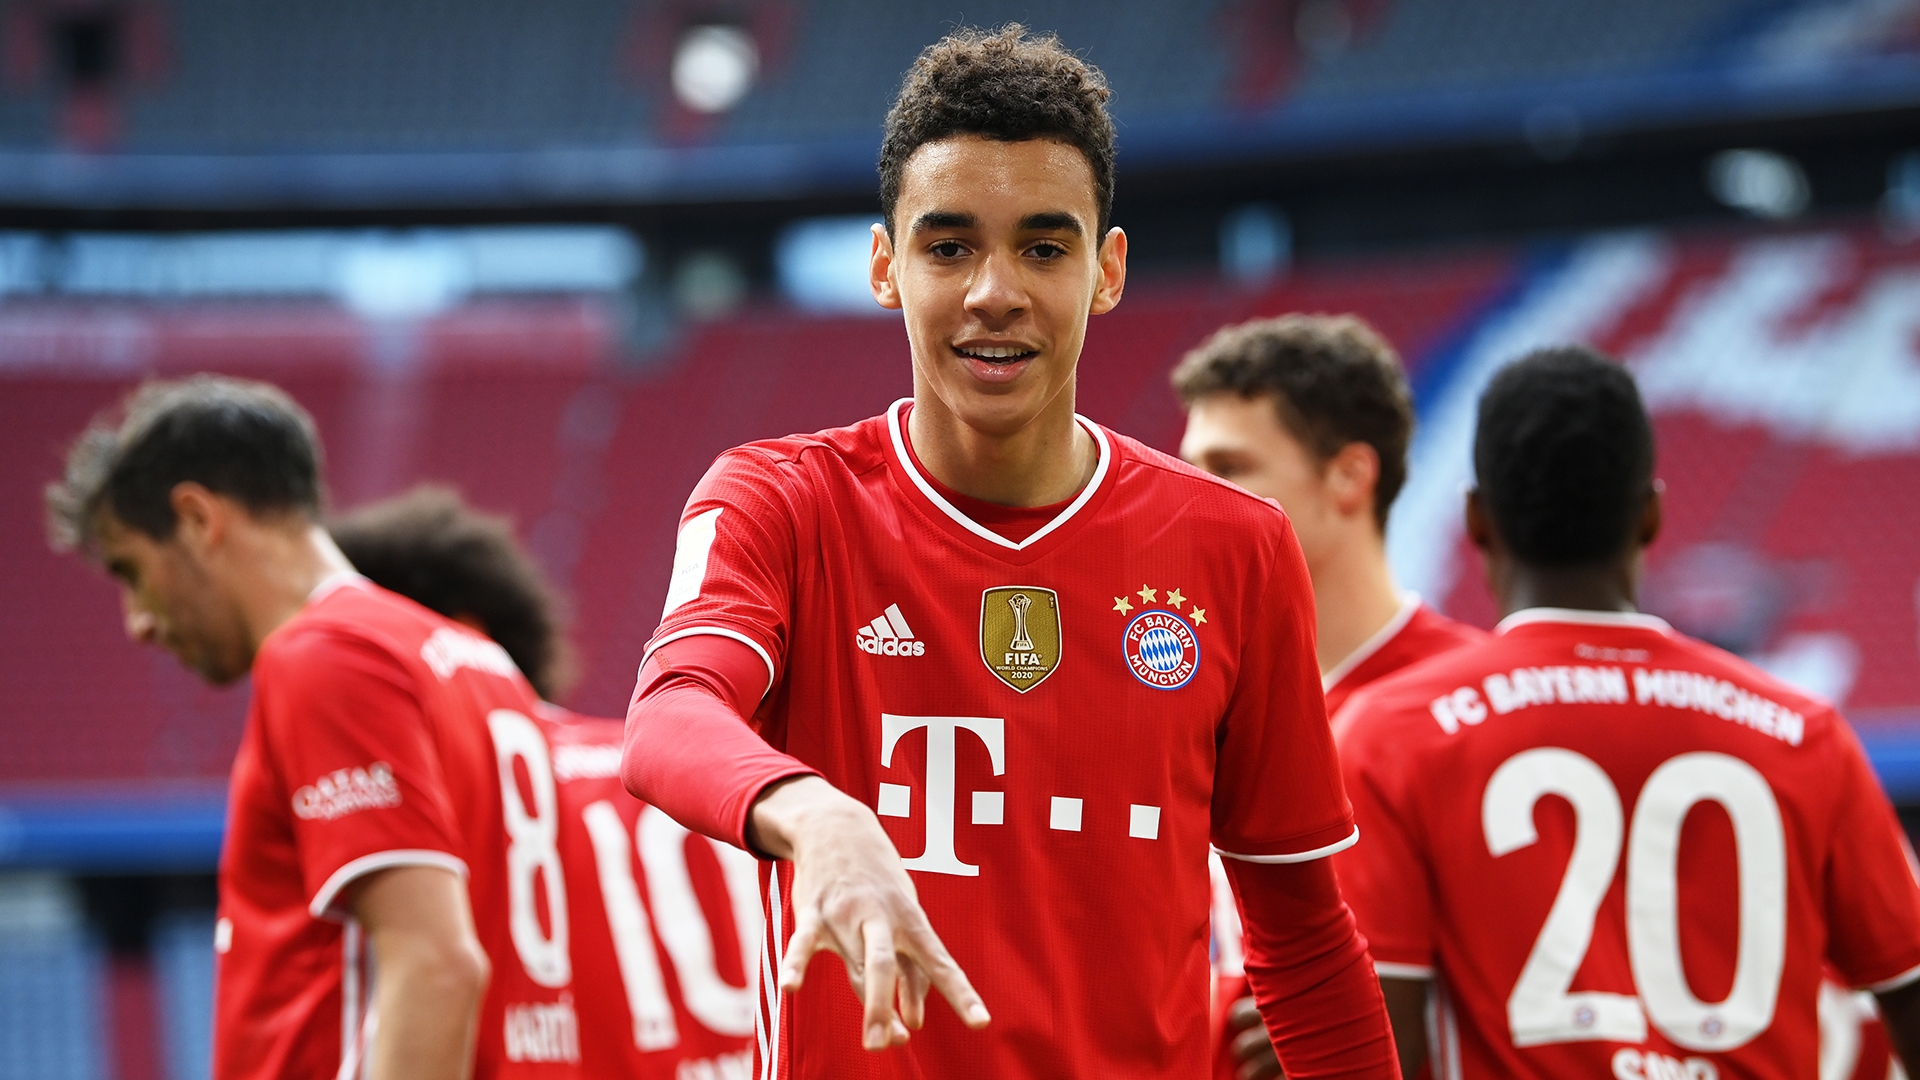 Pemain Bayern Munchen Yang Menjadi Paling Spesial, Jamal Musiala